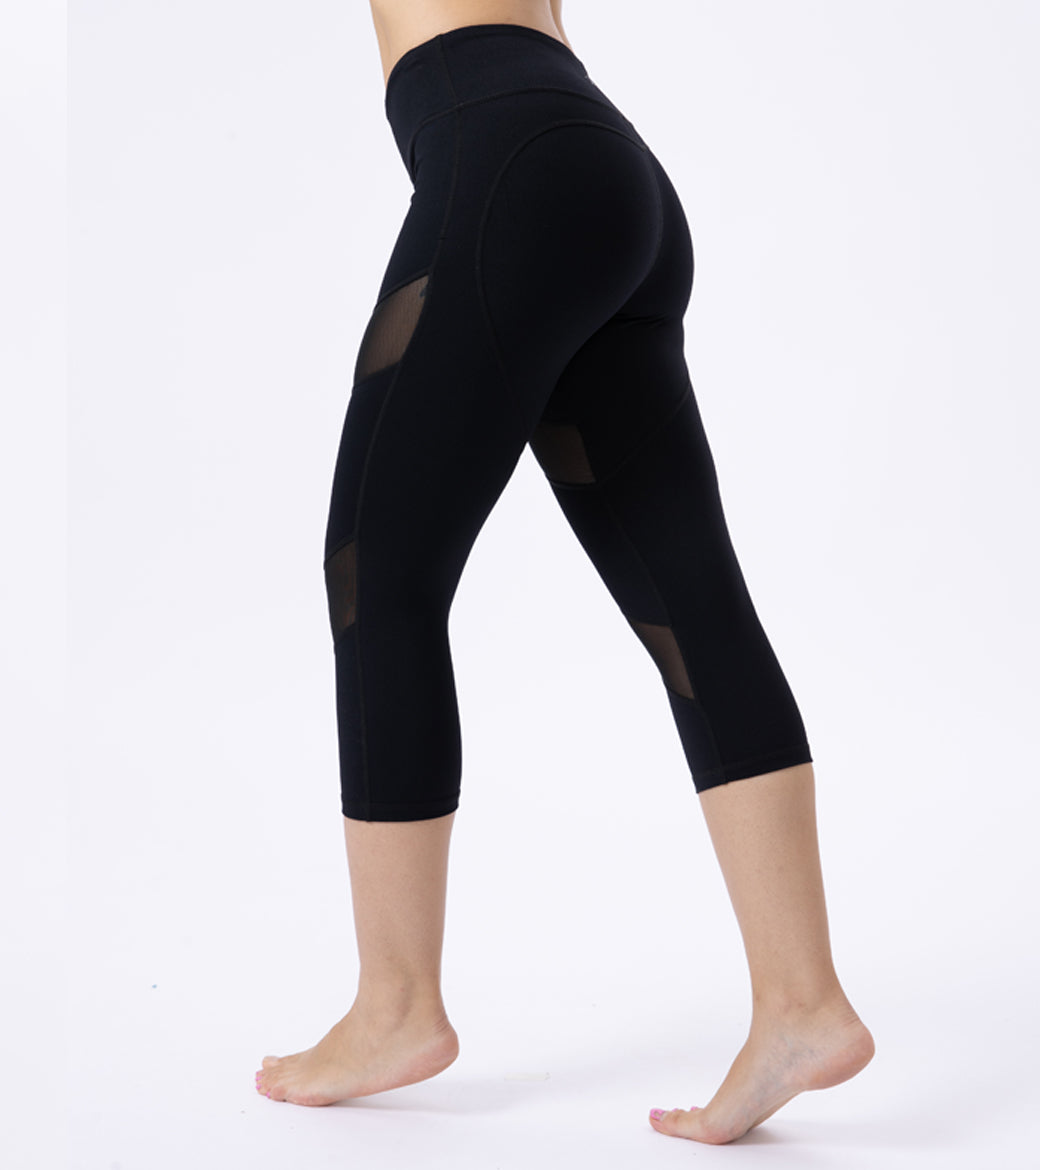 LOVESOFT Black Mesh Workout High Waist Yoga Pants